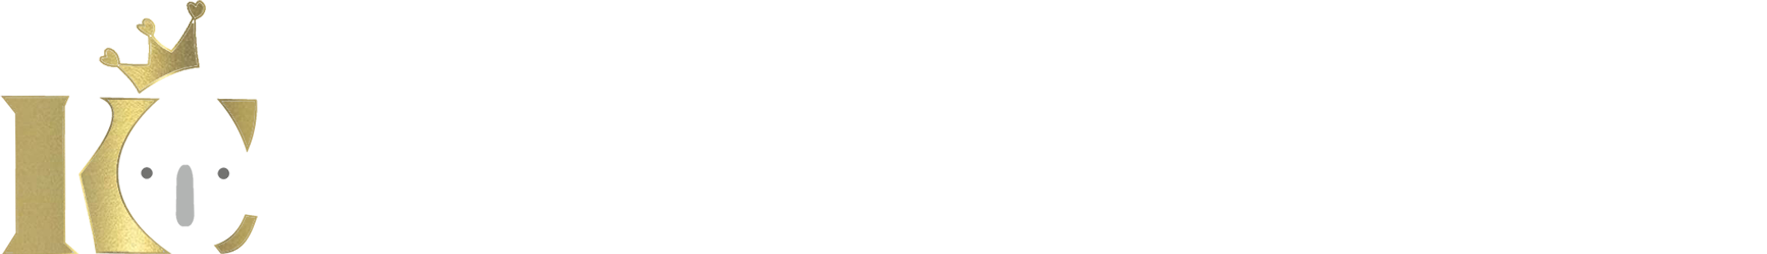 Logo koalachic